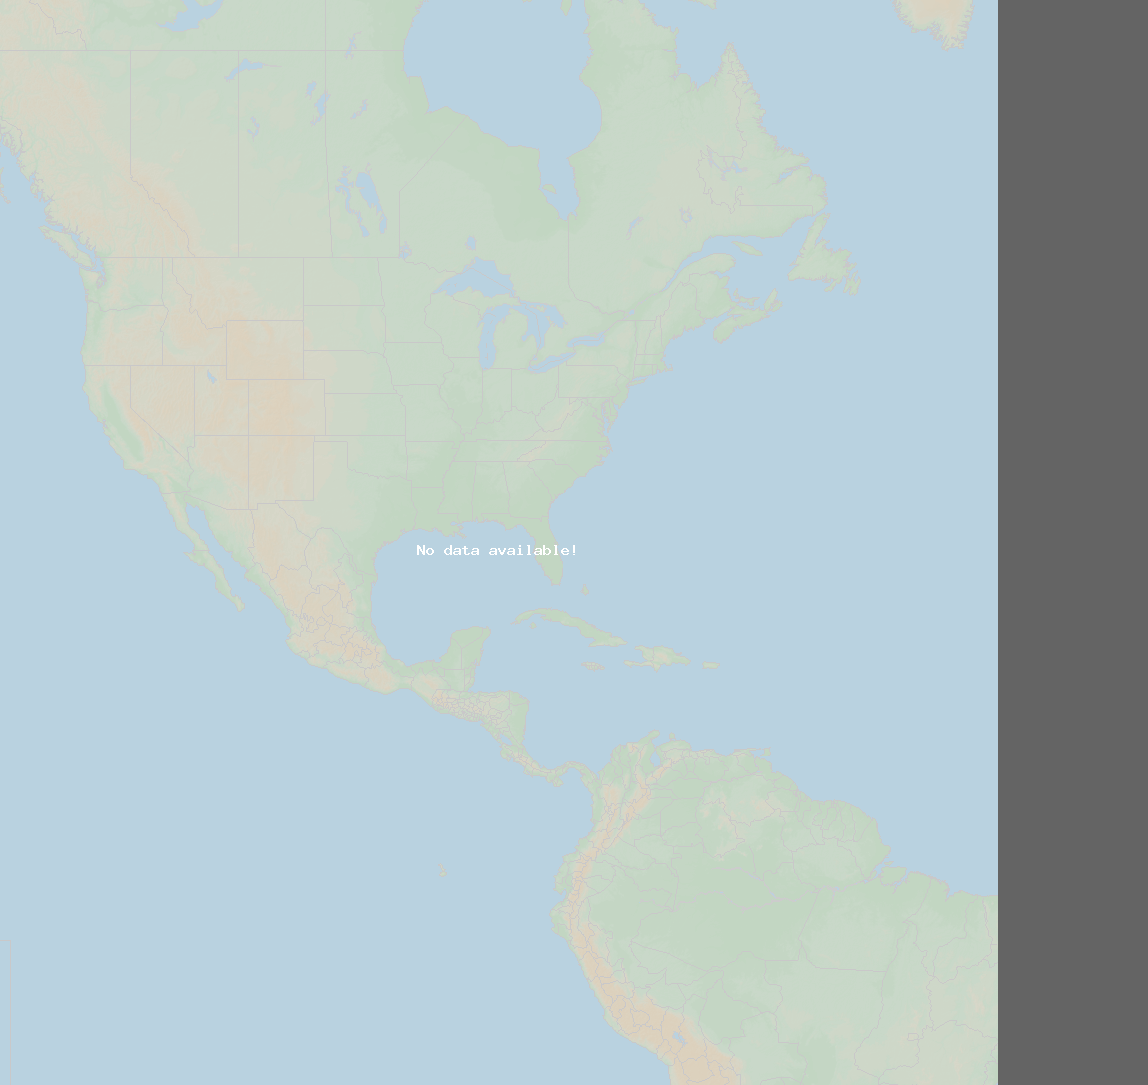 Andel blixtar (Station Yellowknife, NT) North America 2020 